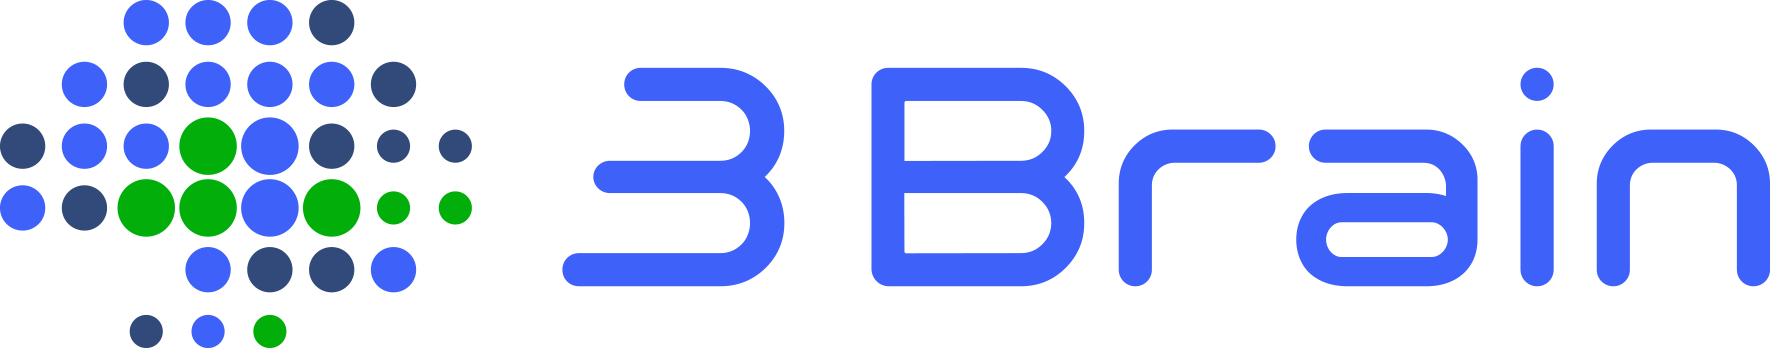 3Brain logo